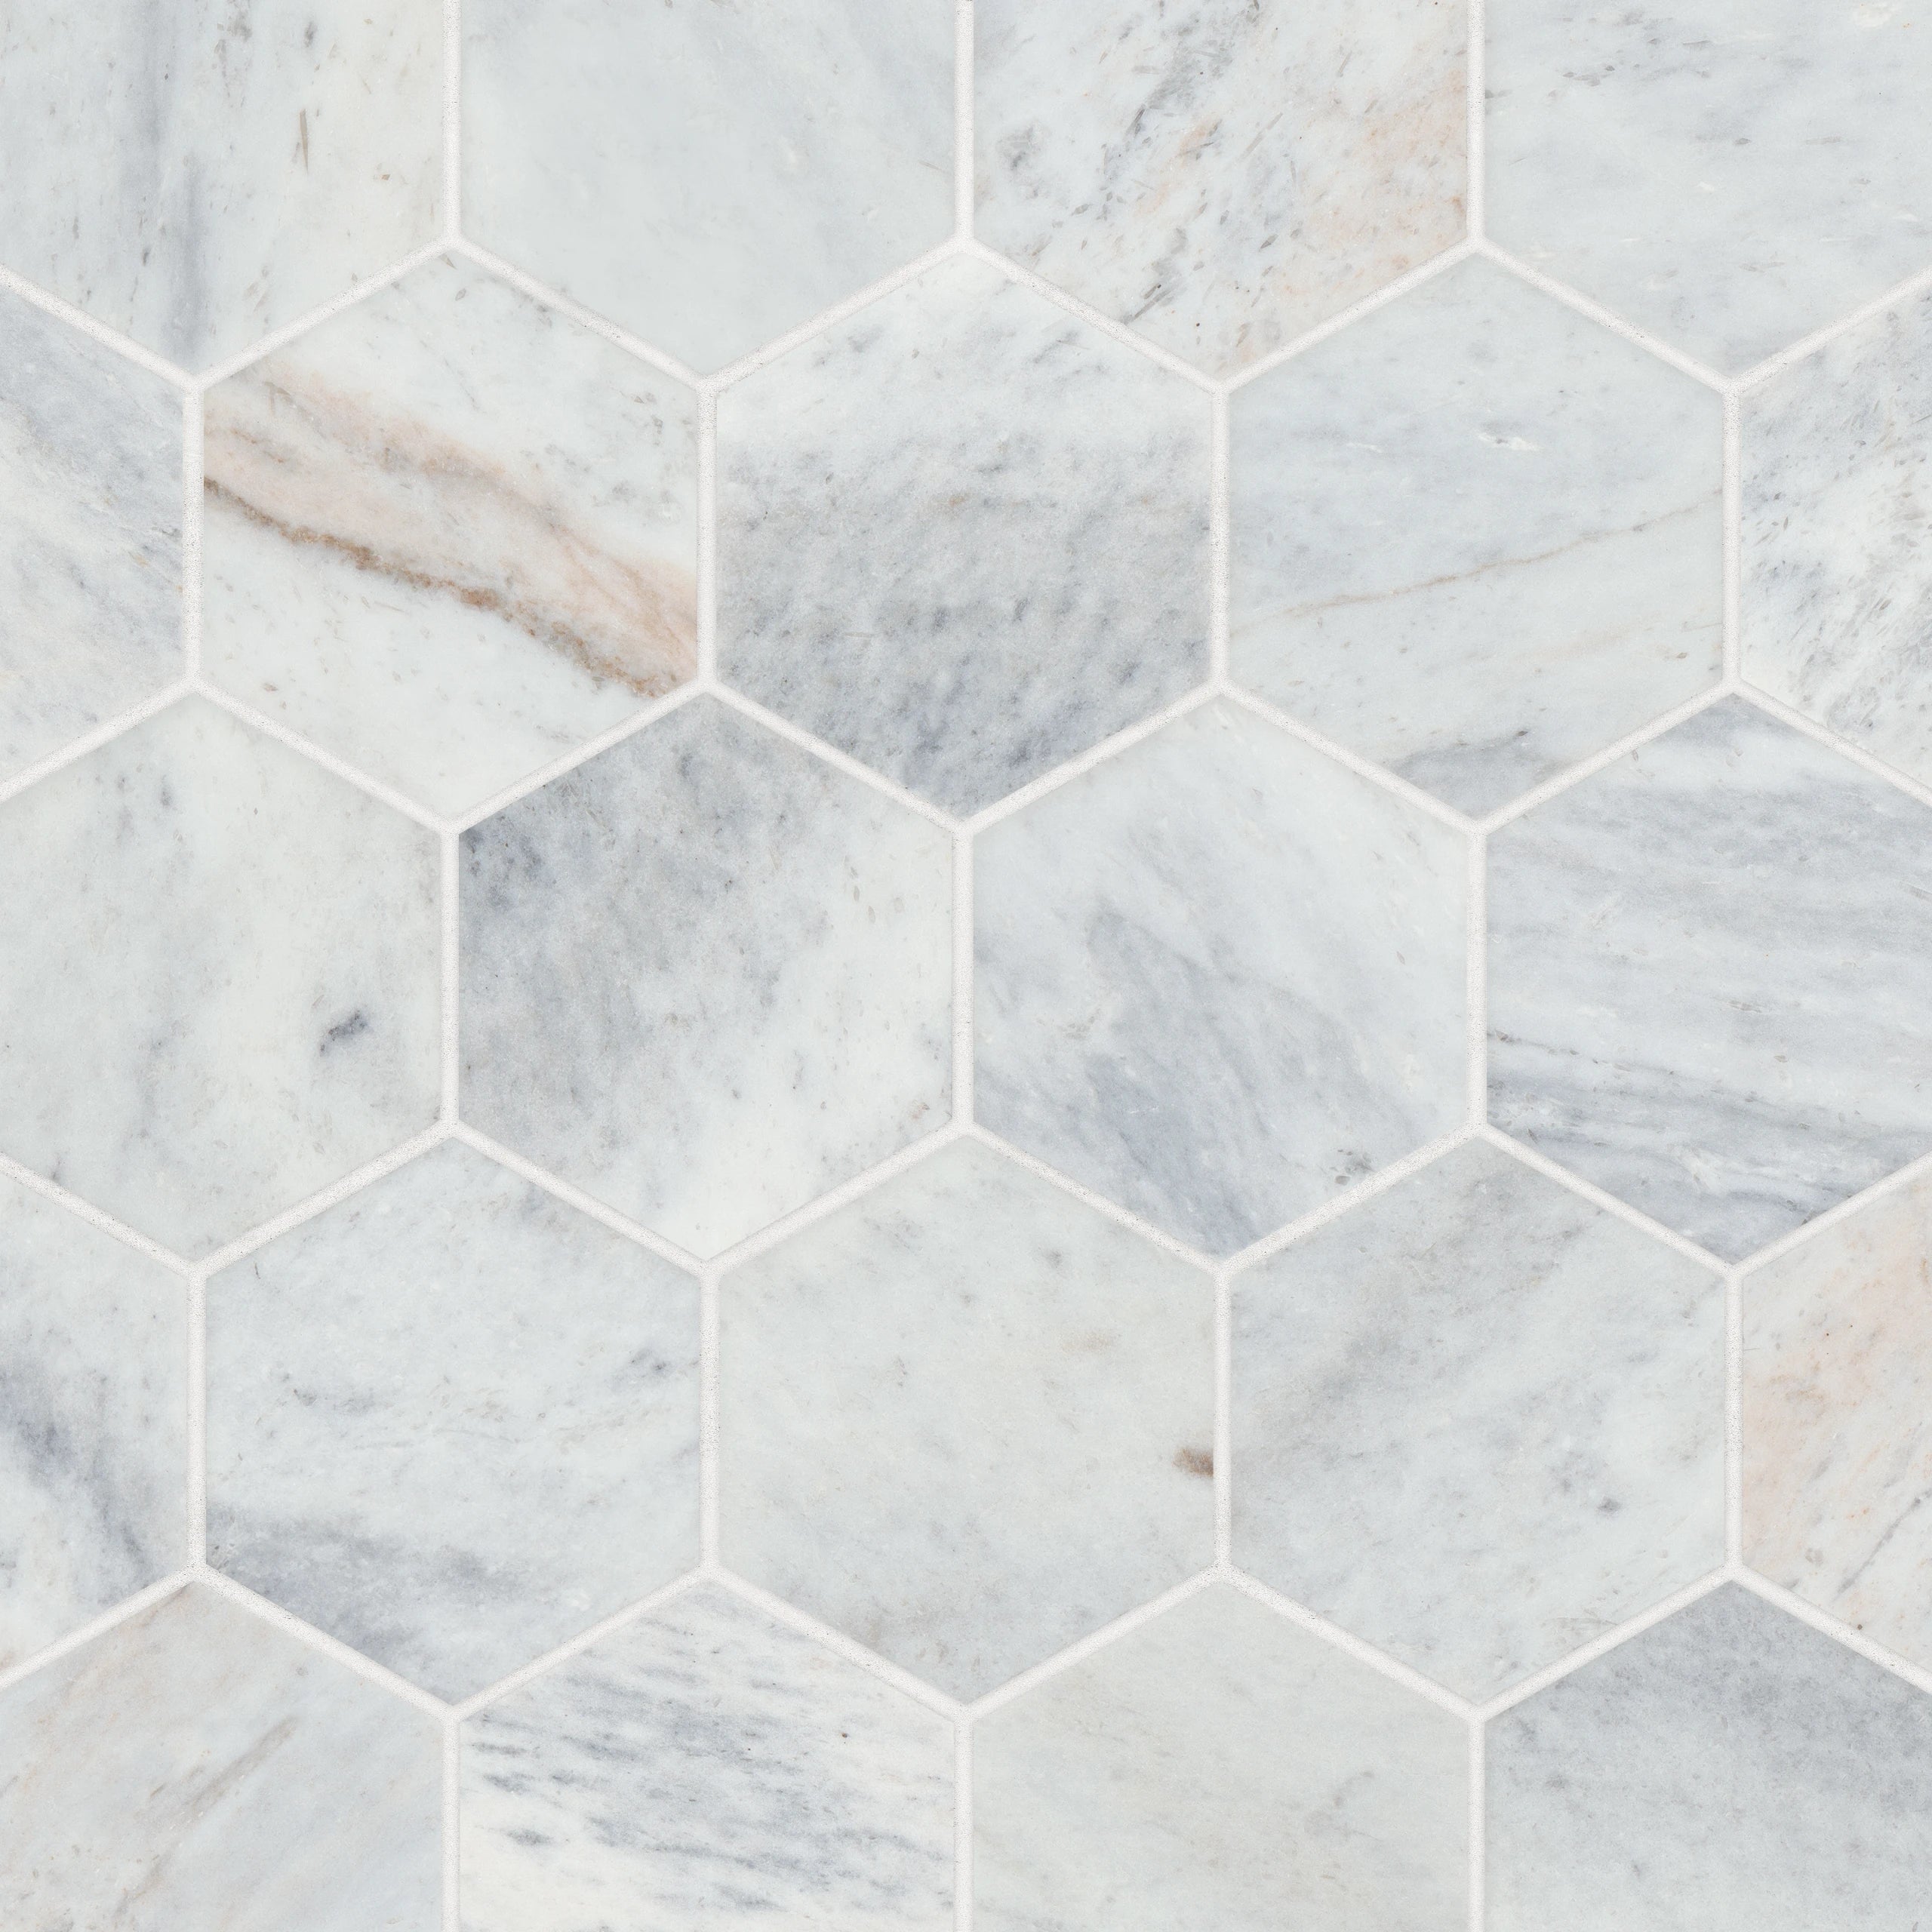 A closeup of grey marble tiles.